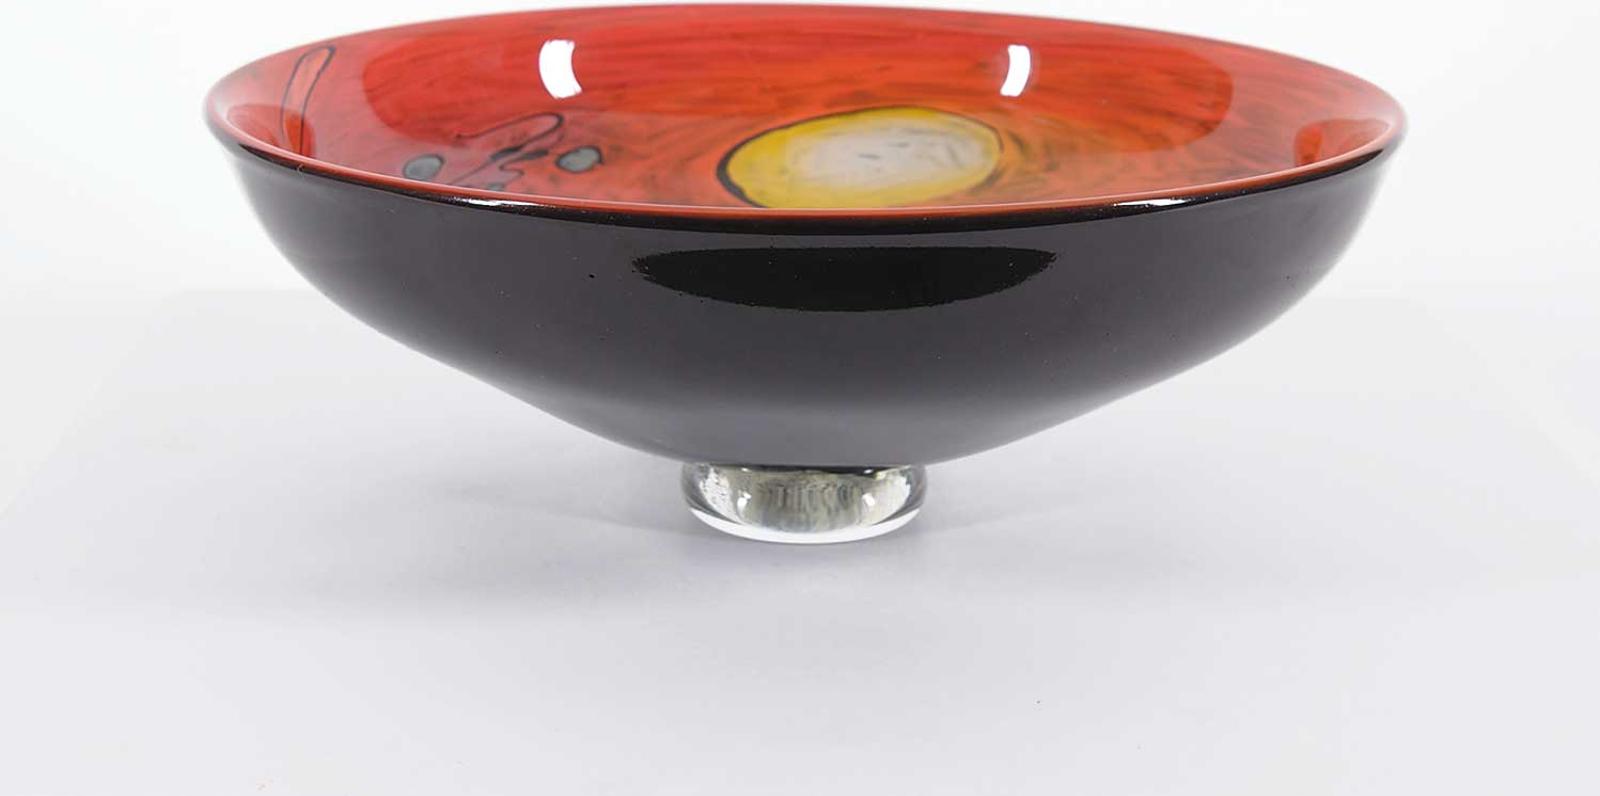 Morna Tudor - Footed Bowl with Colourful Interior